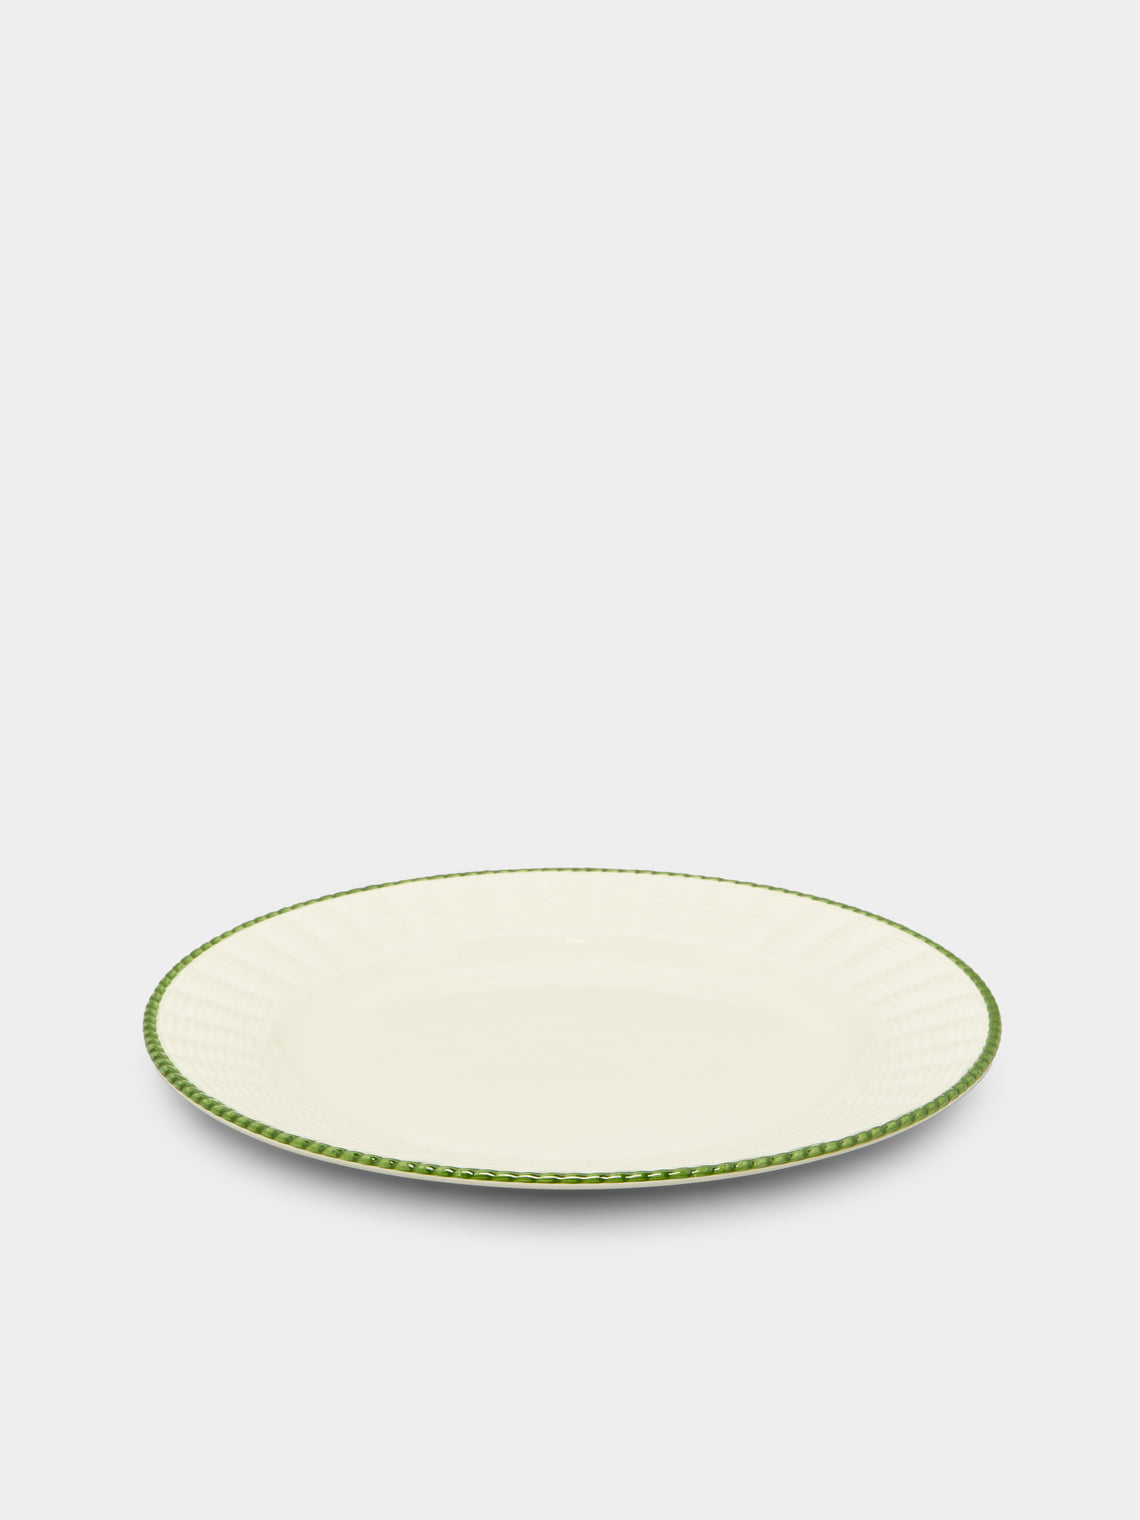 Este Ceramiche - Wicker Hand-Painted Ceramic Dinner Plates (Set of 4) -  - ABASK